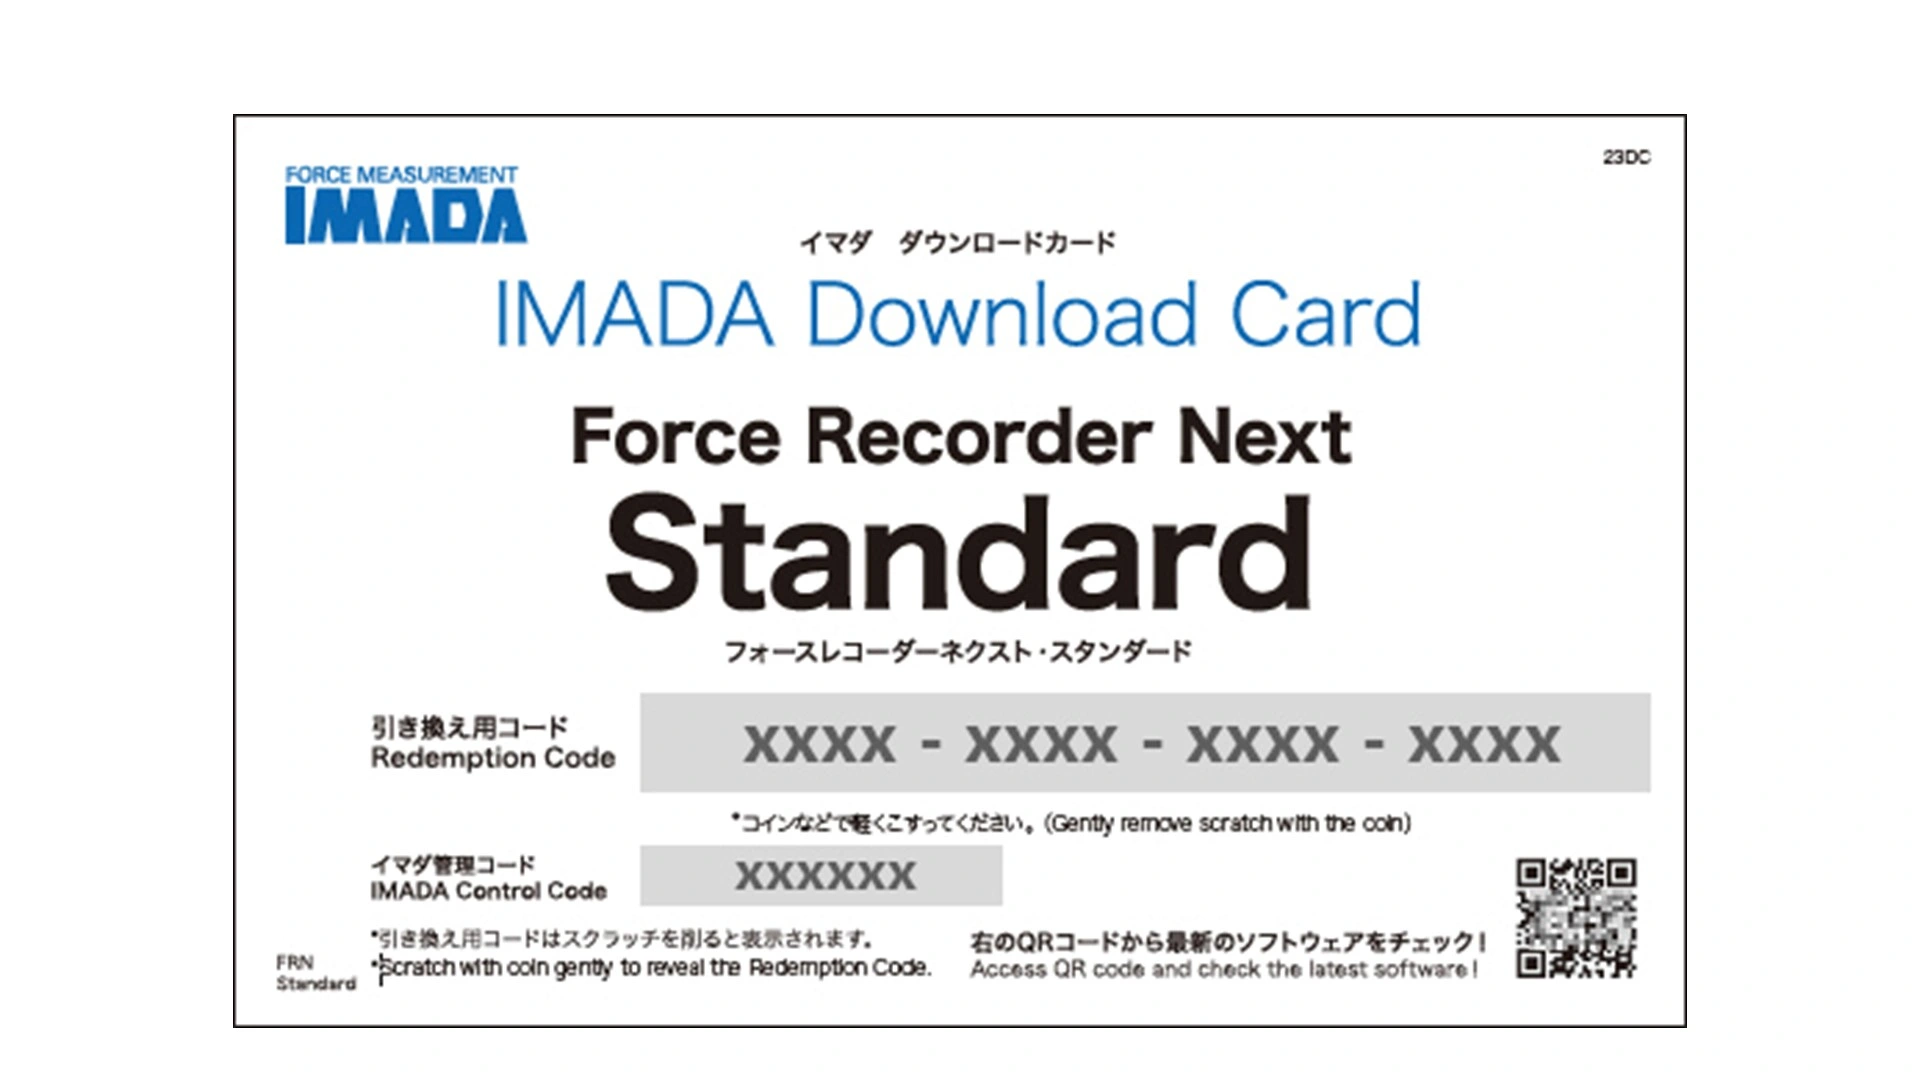 Download Card Force Recorder Next Standard Image